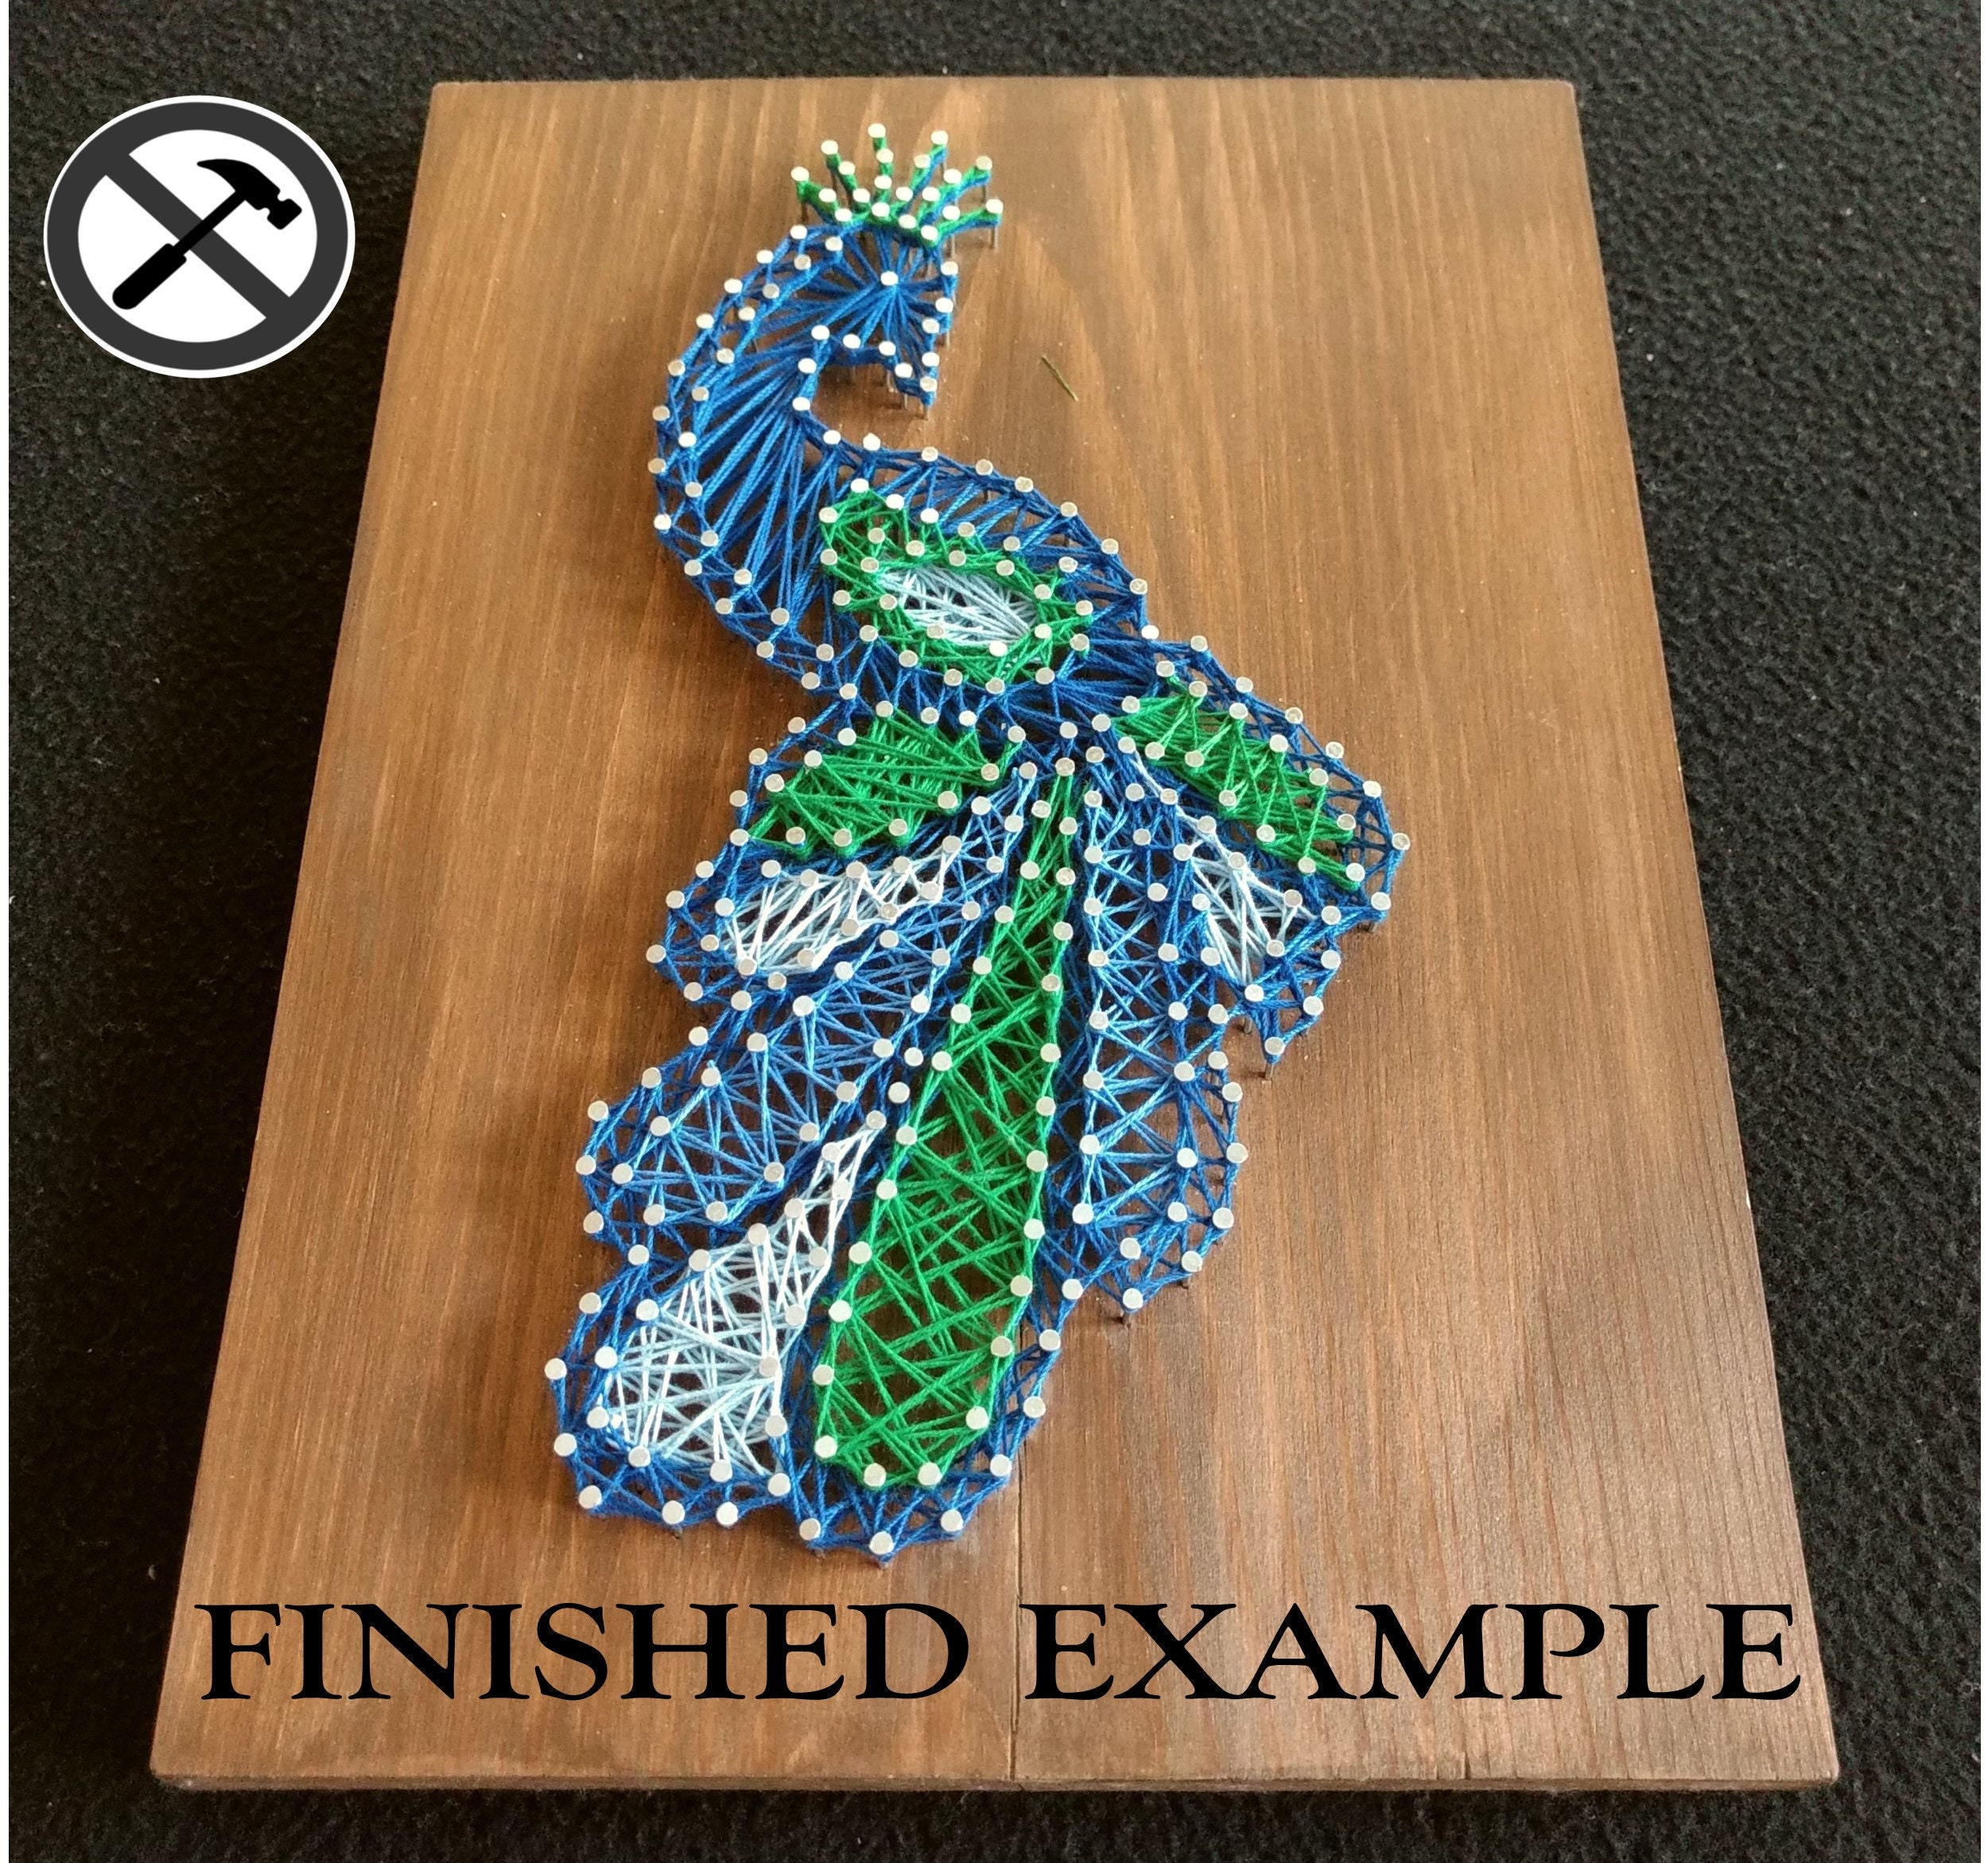 5D DIY Full AB Diamond Embroidery Mosaic Peacock Diamond Painting Kit 